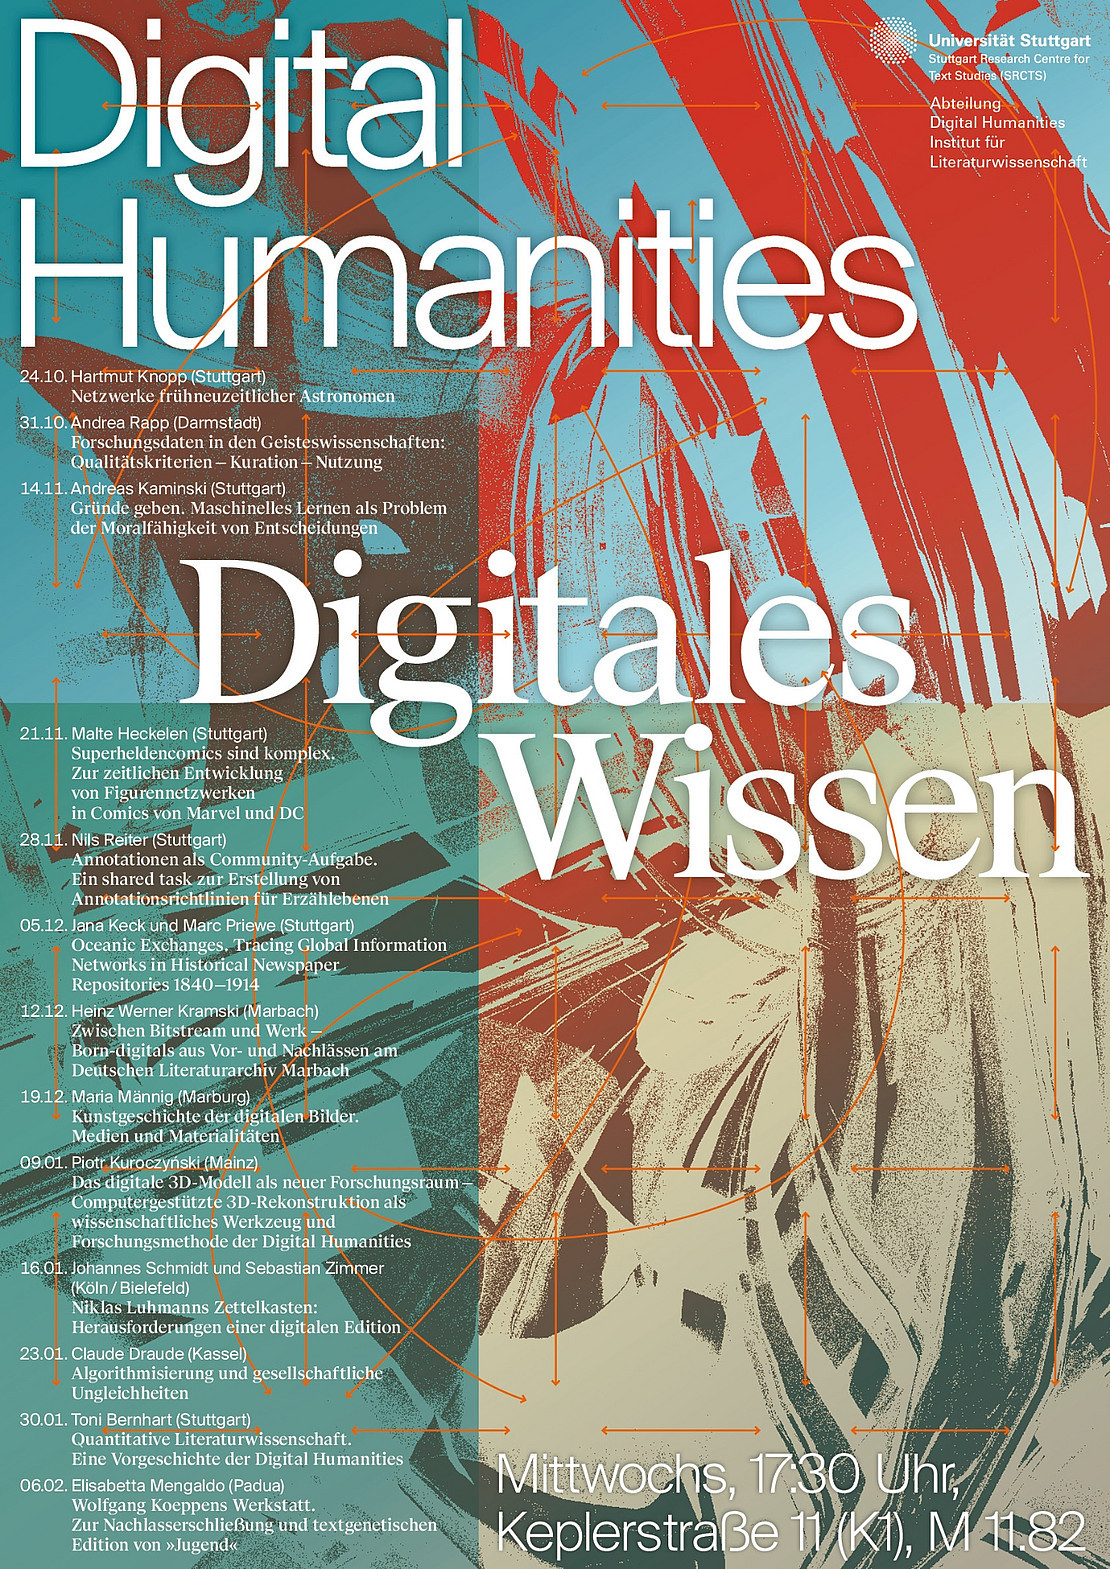 Digital Humanities - Digital Knowledge, Wednesdays, 5:30 p.m., Keplerstraße 11 (K1), M 11.82, University of Stuttgart